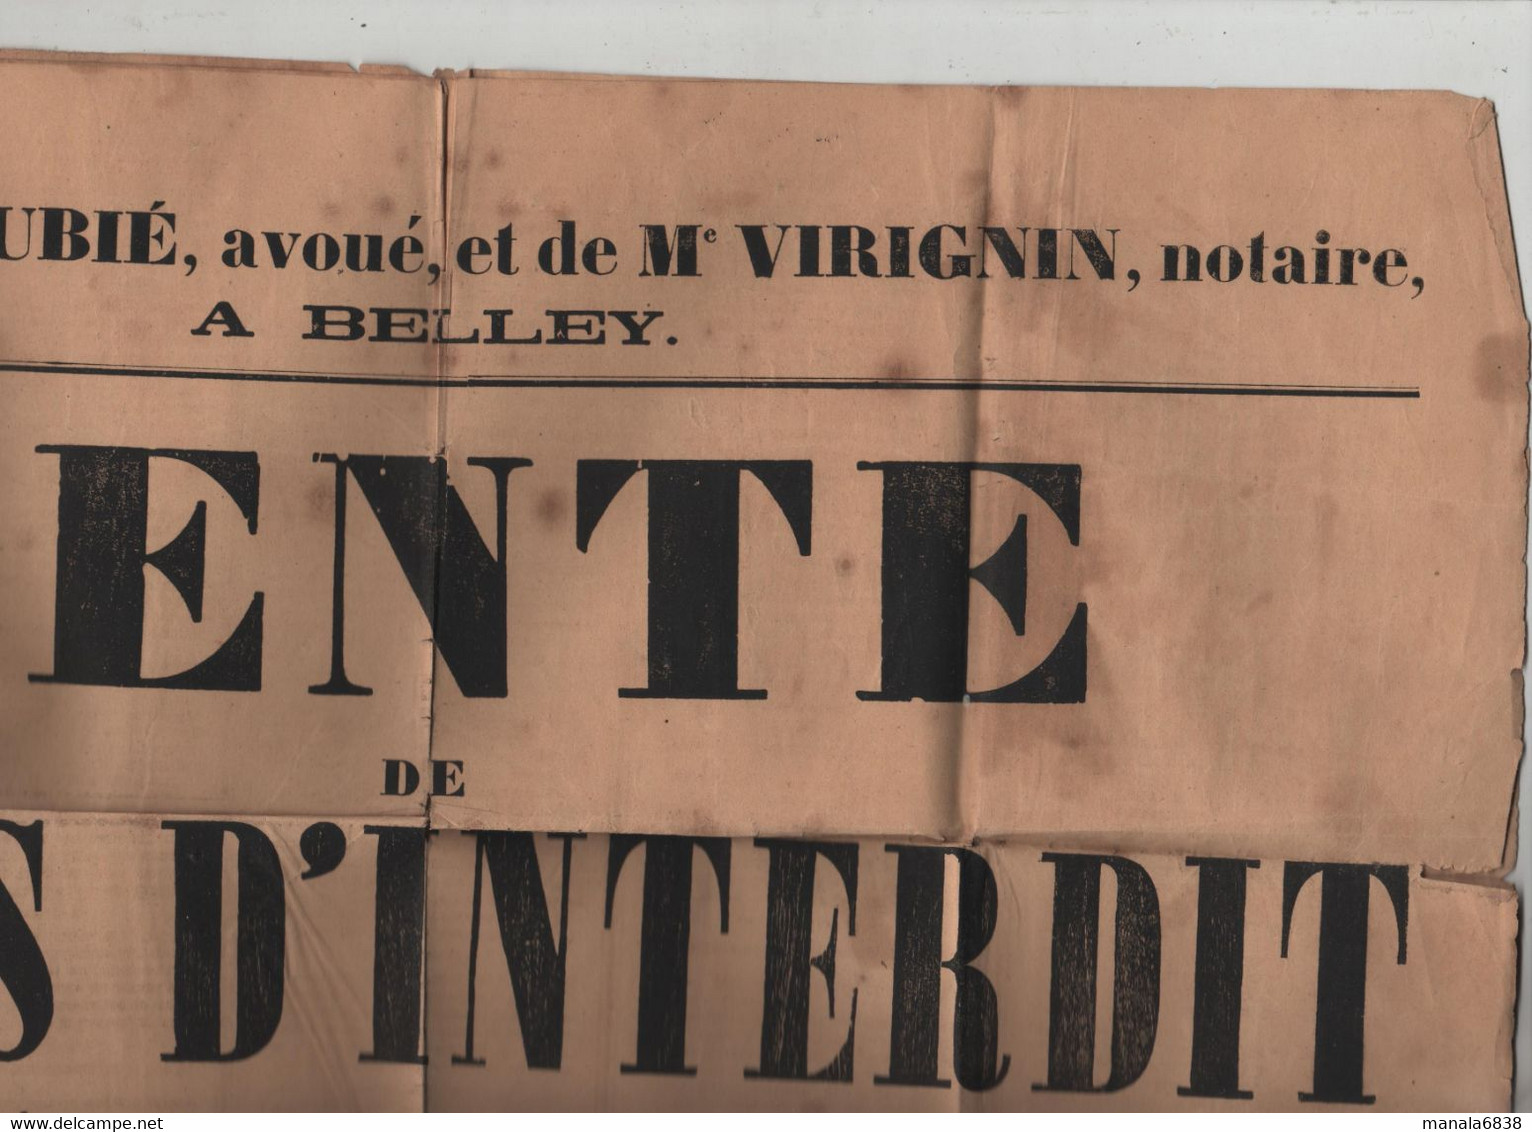 Vente De Biens D'interdit Saint Martin De Bavel Ceyzérieu Talissieu Cusieu Béon 1878 Dubié  Virignin Notaires Belley - Plakate